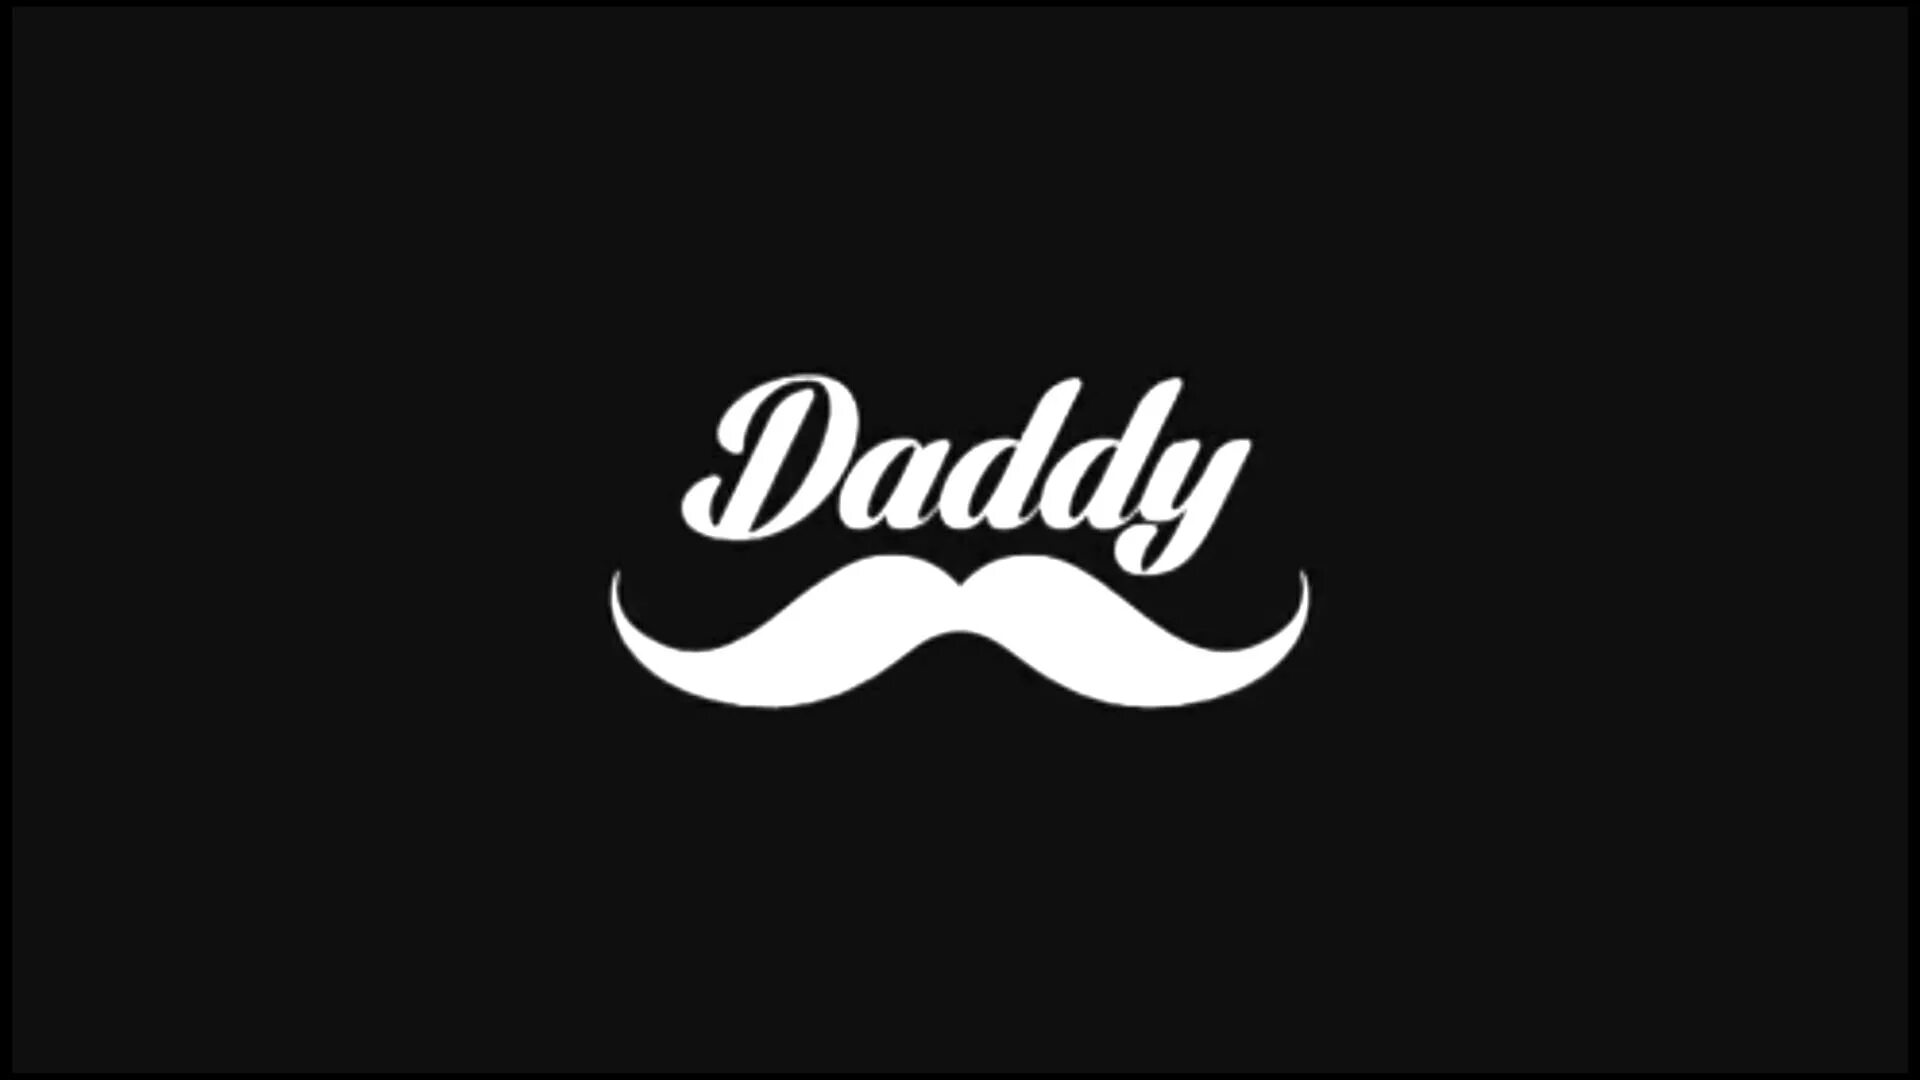 Dad логотип. Daddy надпись. Daddy обои. Надписи i_dad_. L am dad